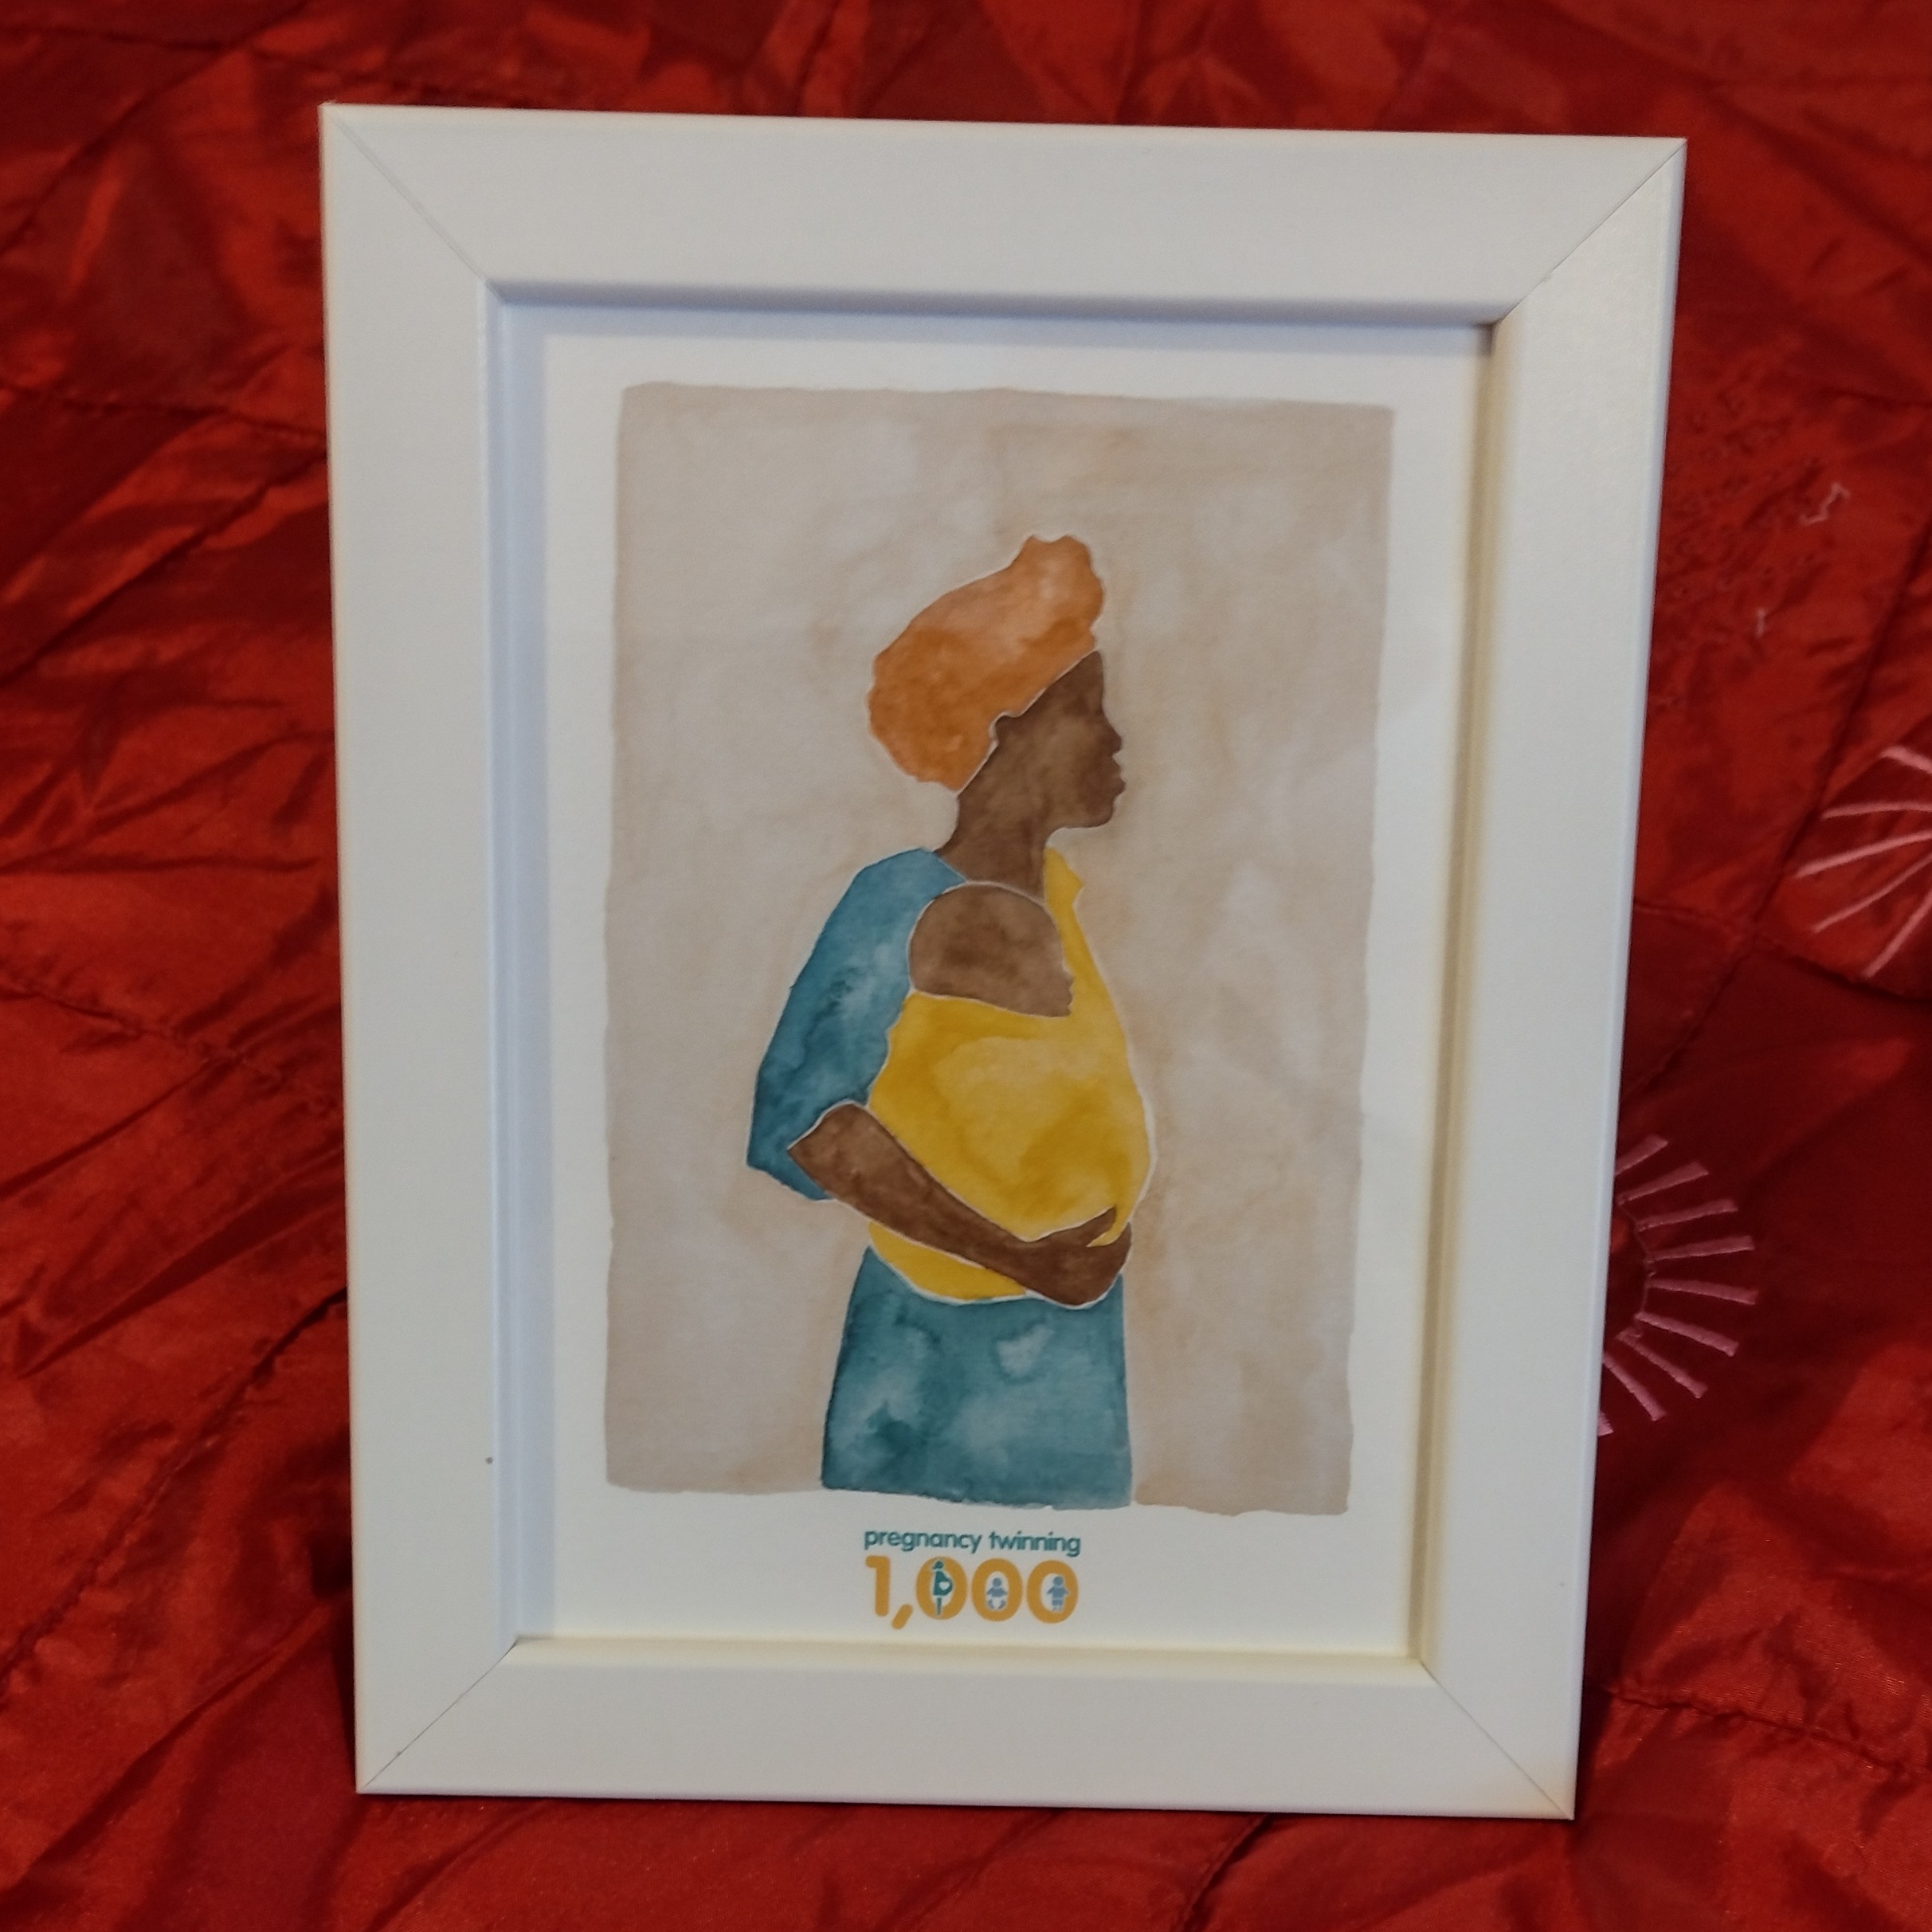 Pregnancy Twinning African art work